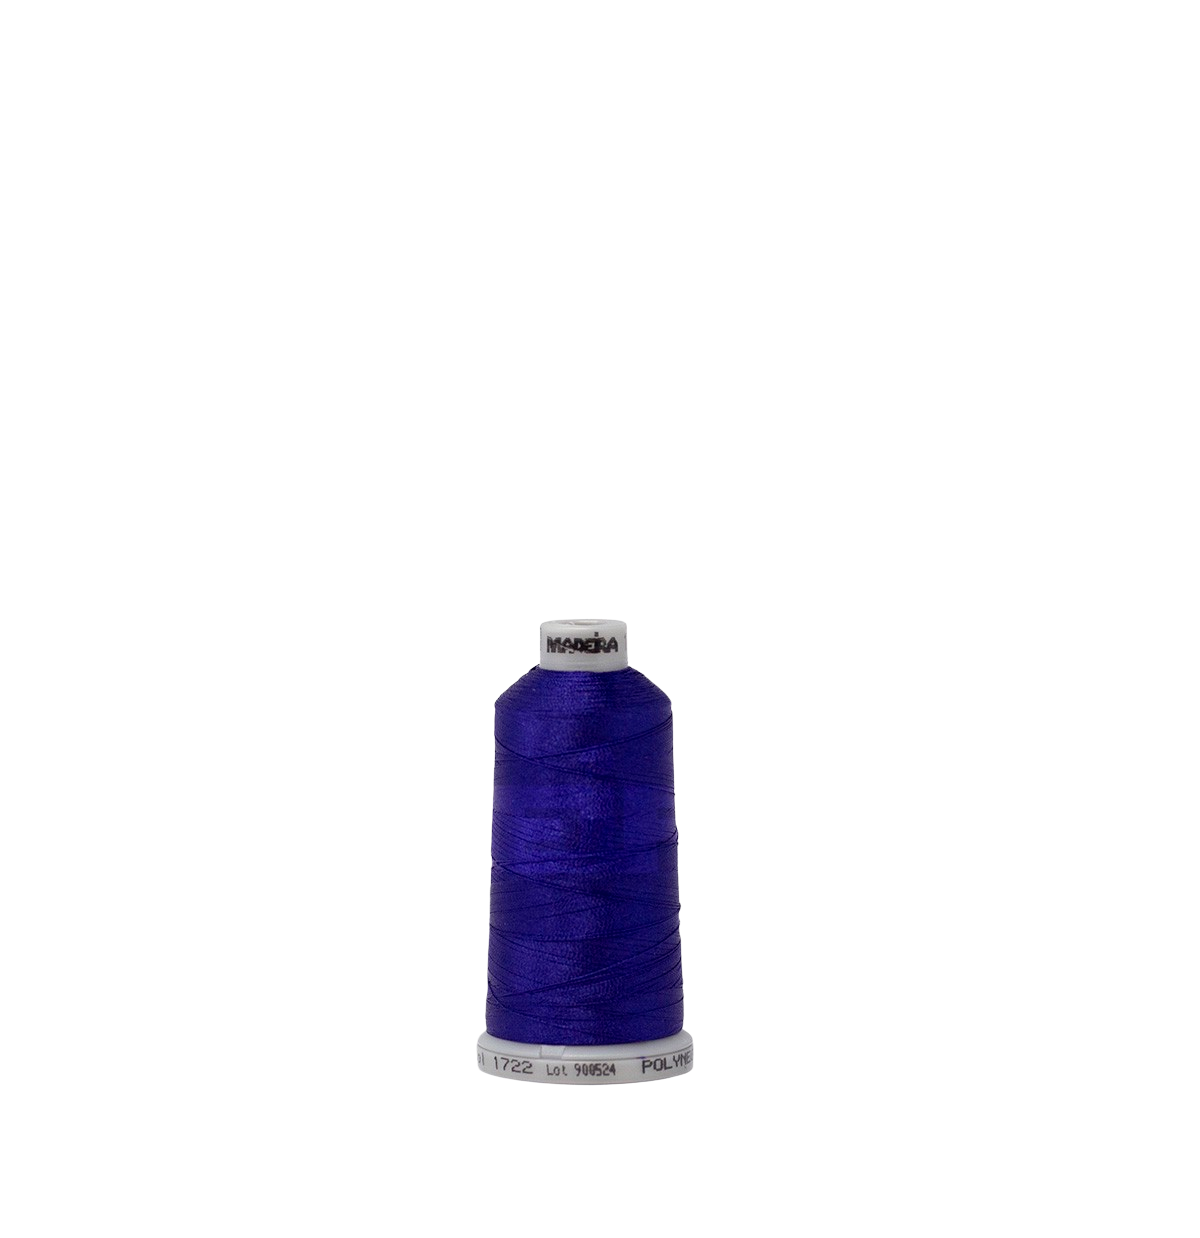 Royal Purple 1722 #40 Weight Madeira Polyneon Thread - 0